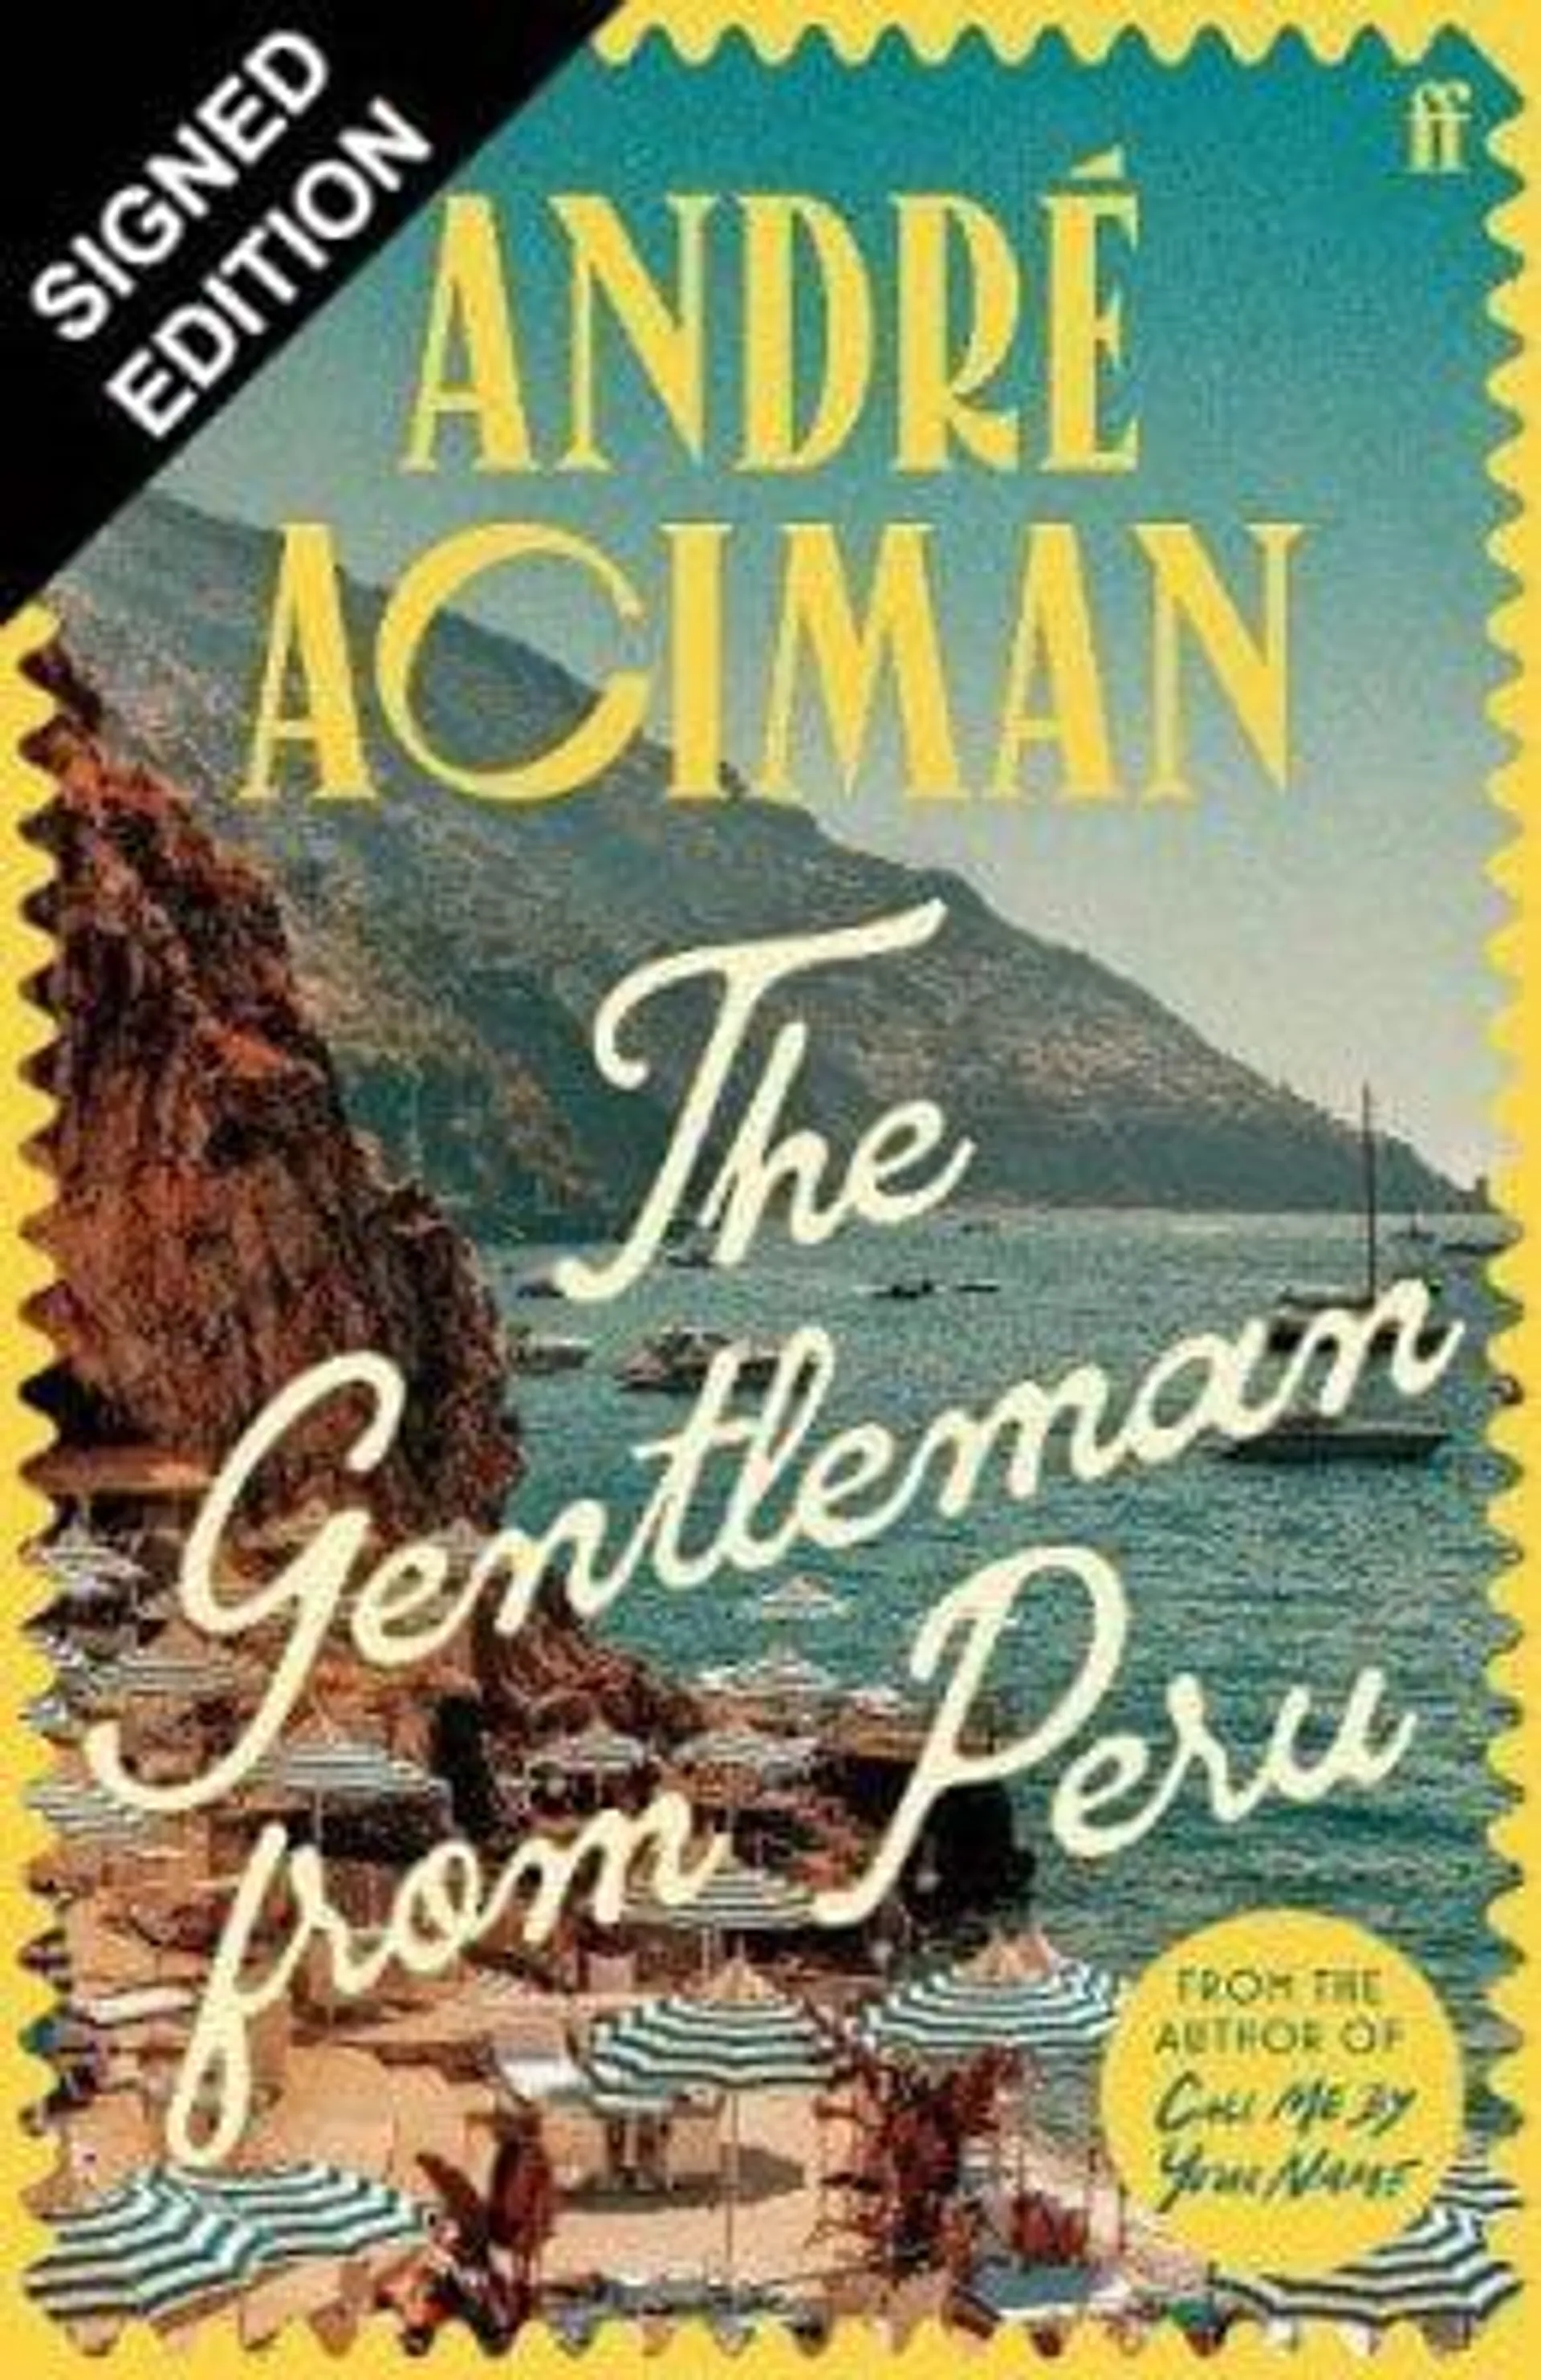 The Gentleman From Peru: Signed Edition (Hardback)